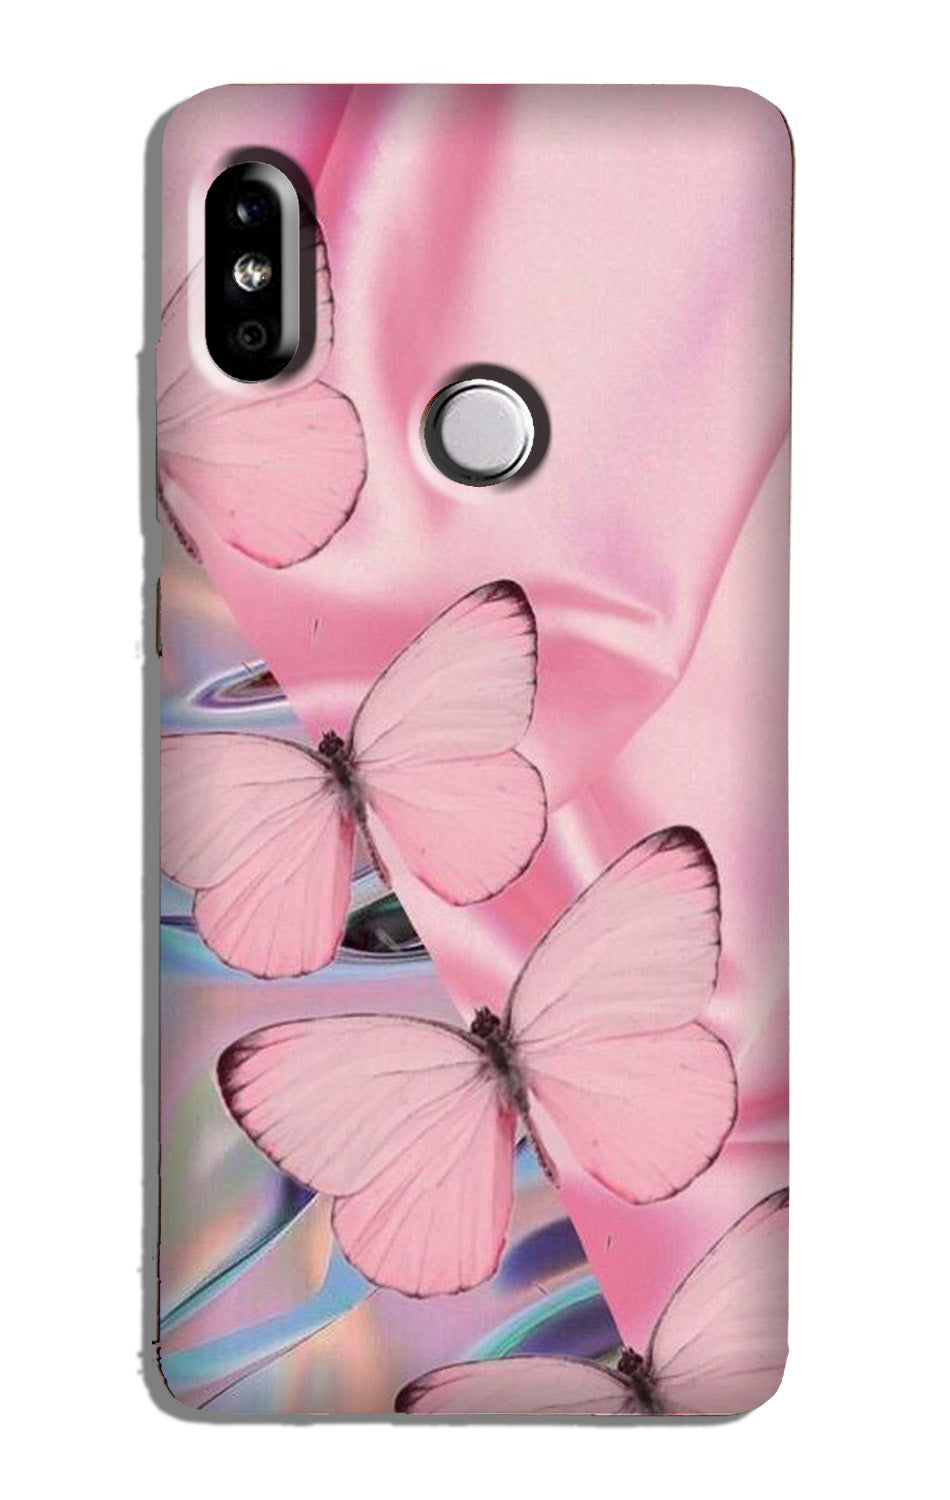 Butterflies Case for Redmi Note 6 Pro